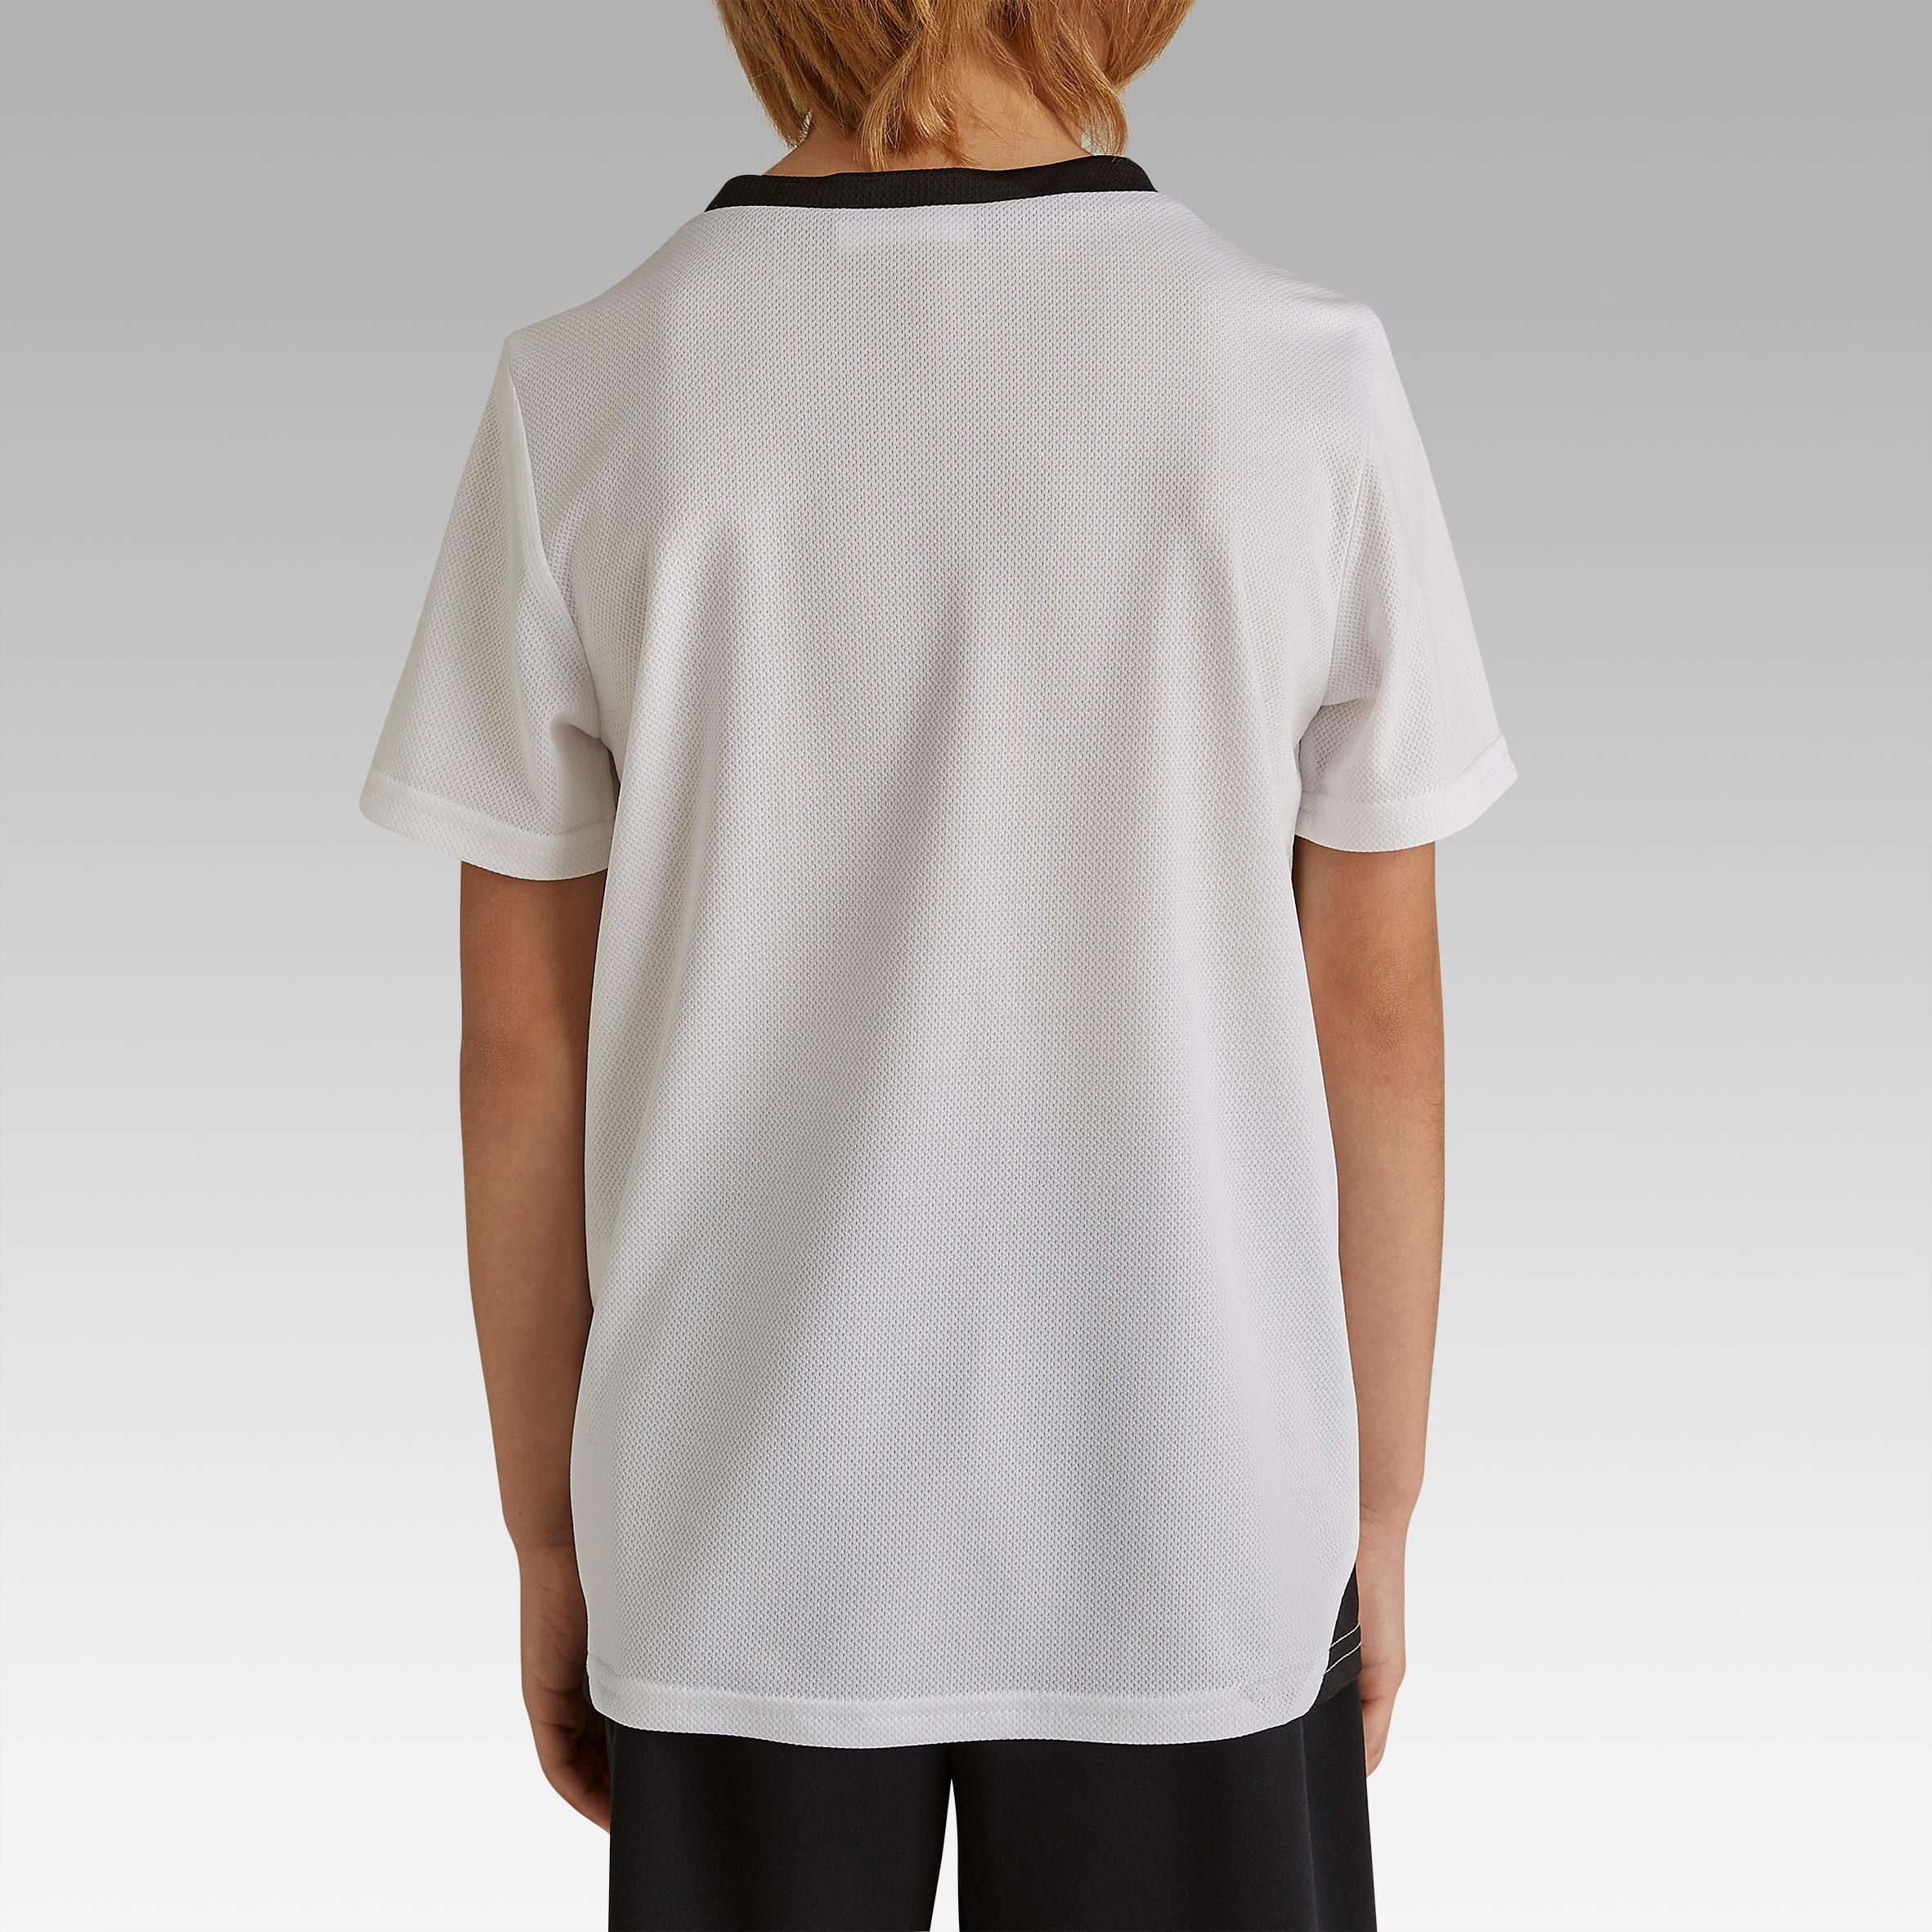 Refurbished Kids Football Shirt Essential - A Grade 5/7